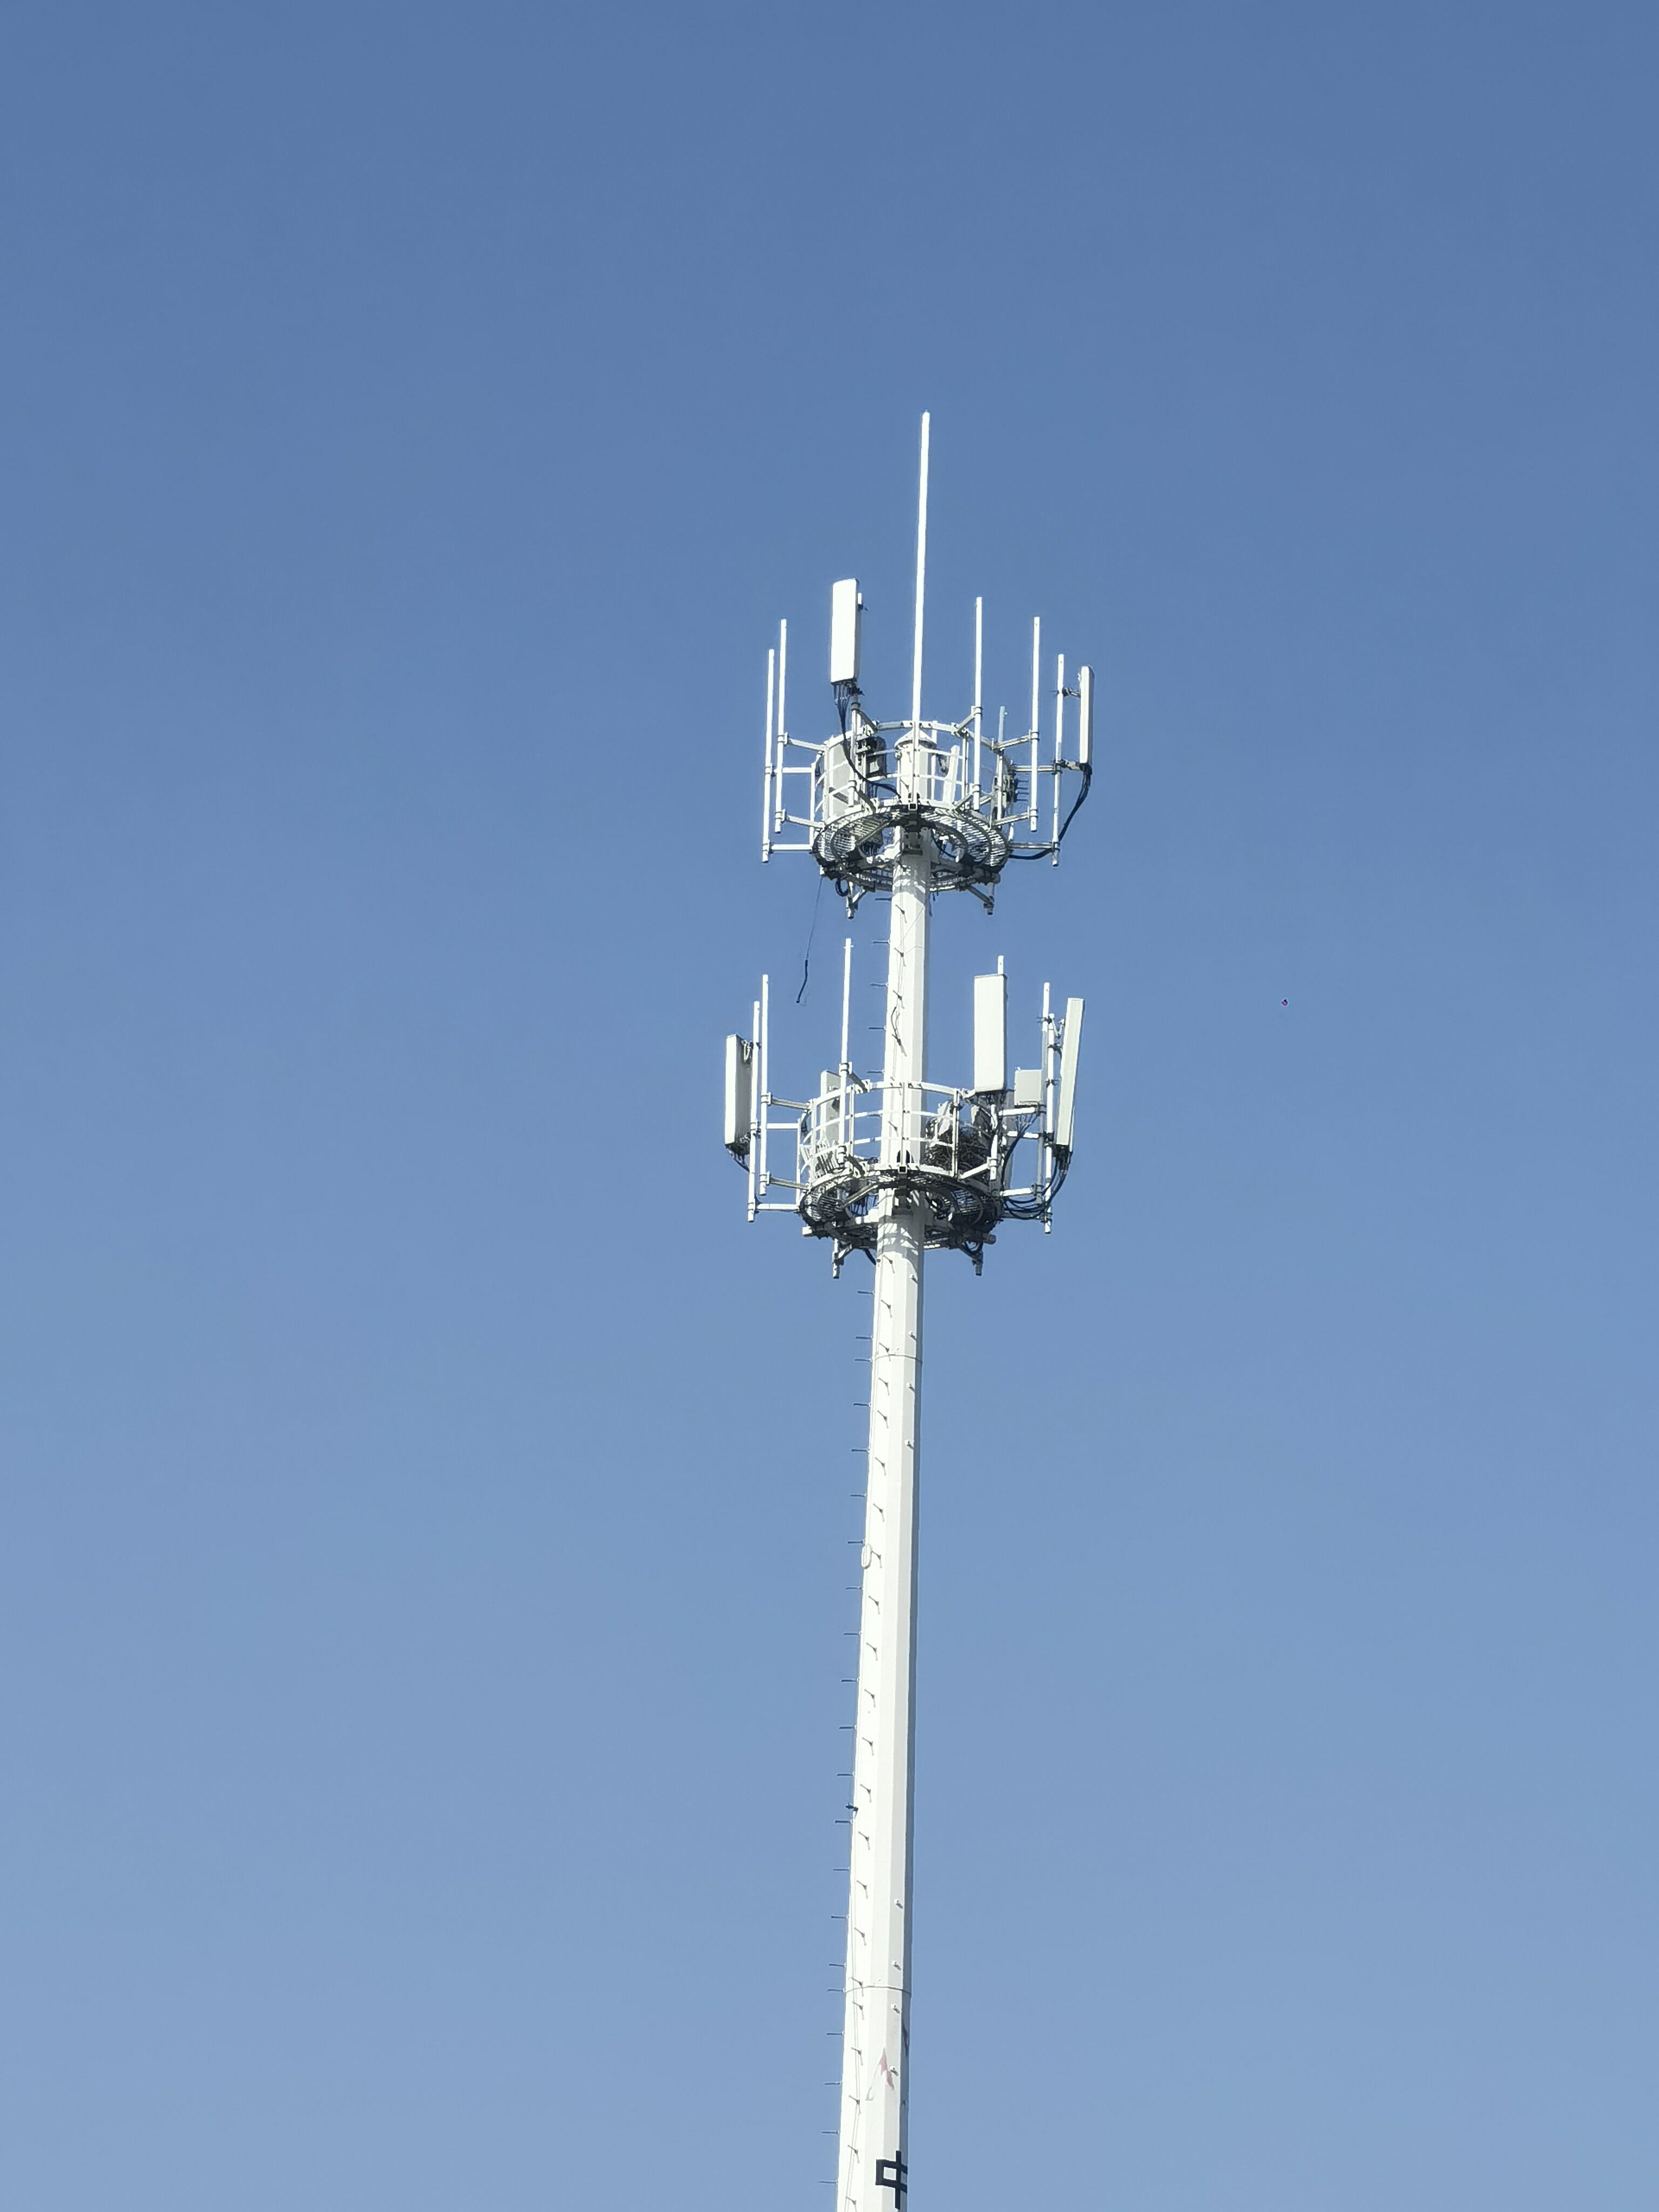 Monopole Tower Antenna Communication Transmission factory